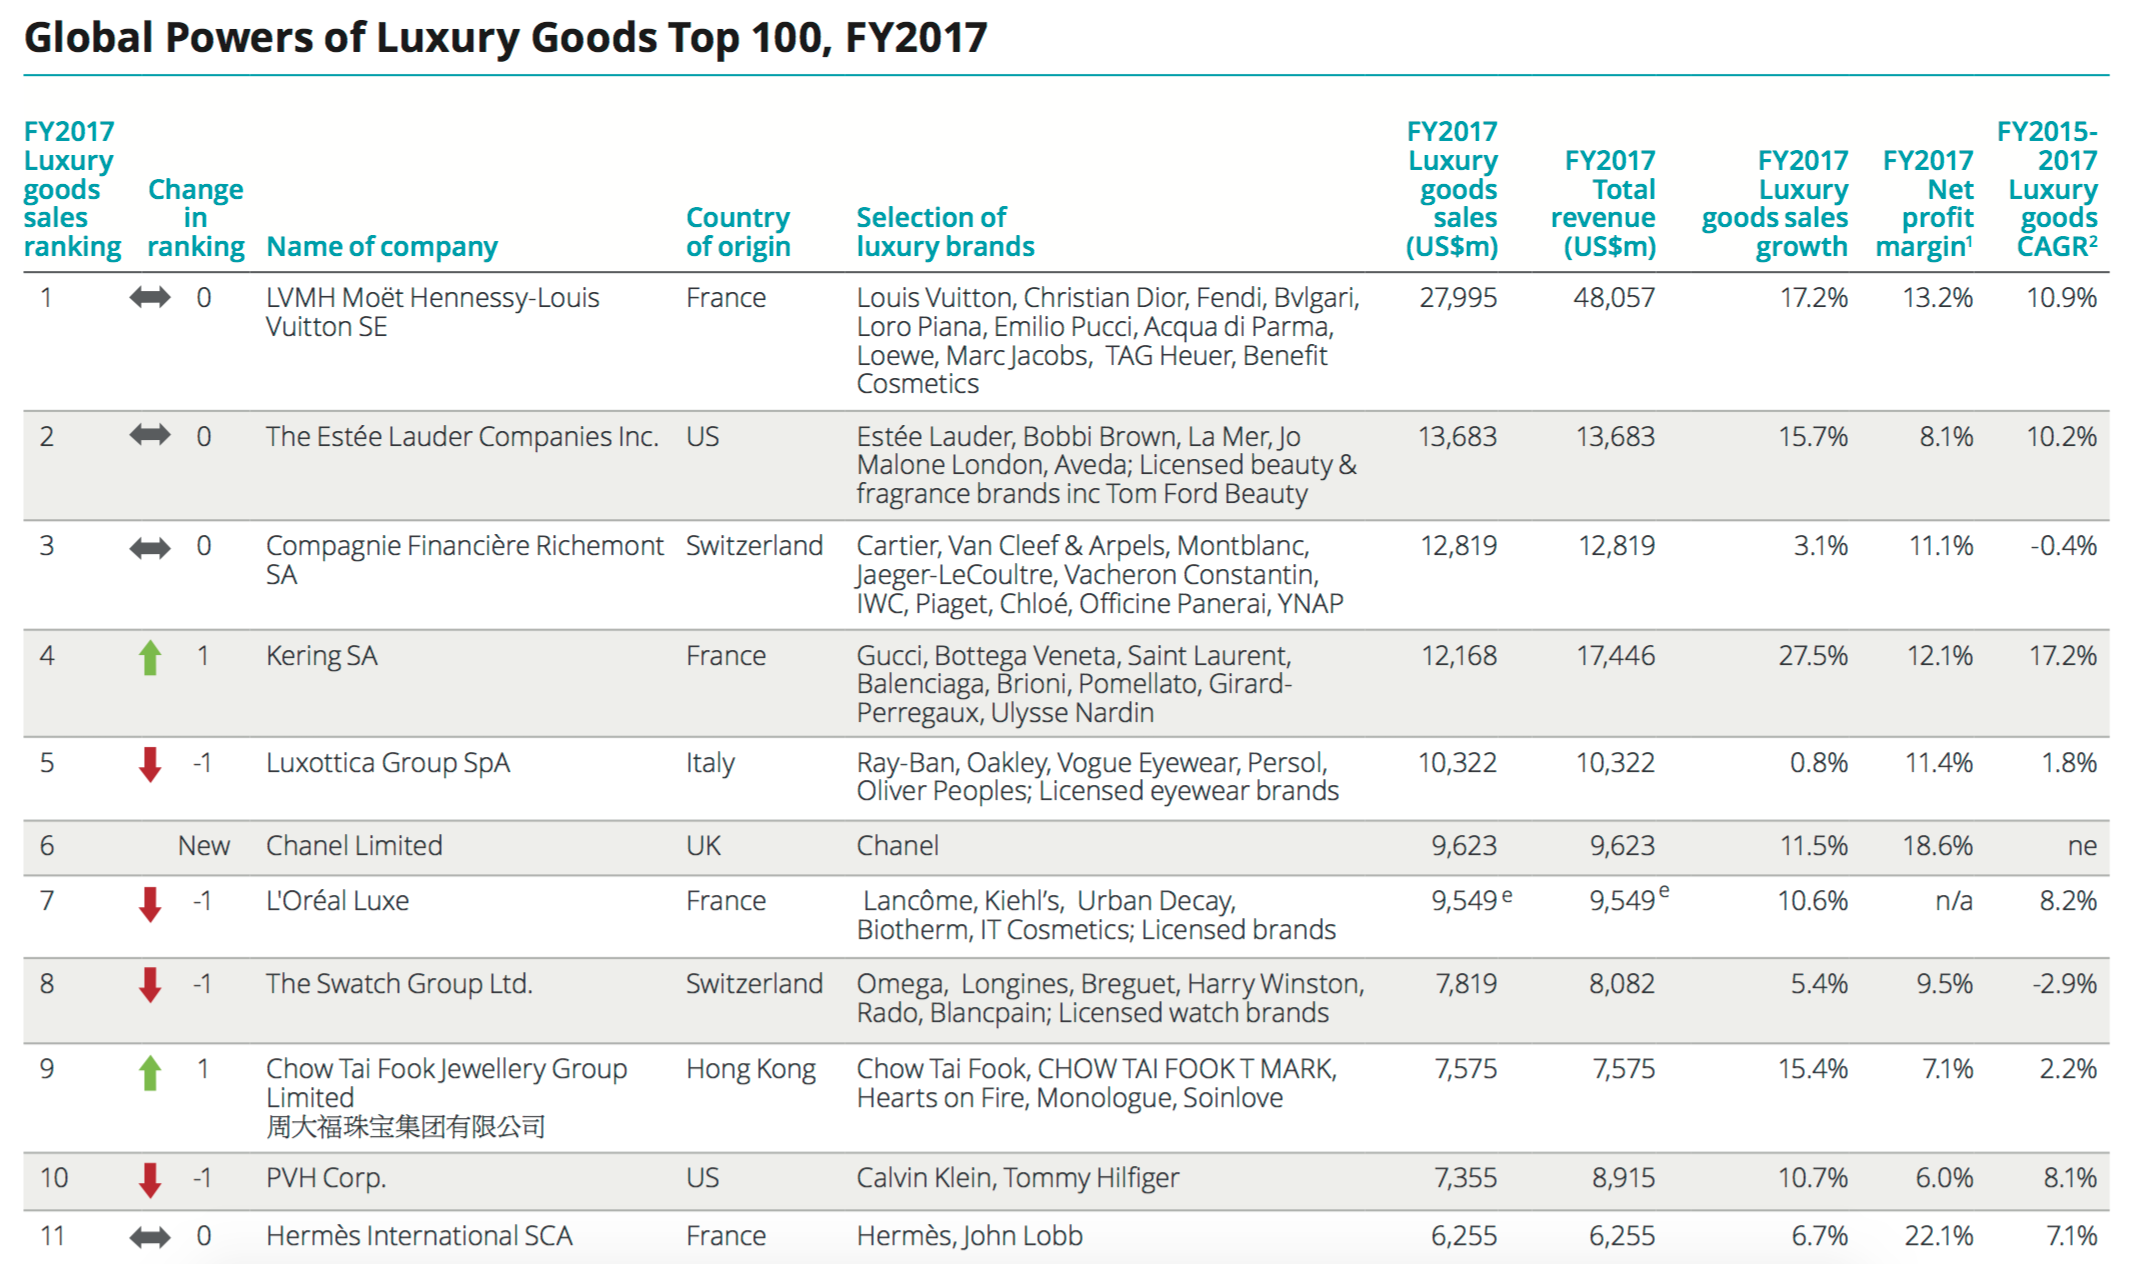 Thailand Luxury Goods Companies - Top Company List